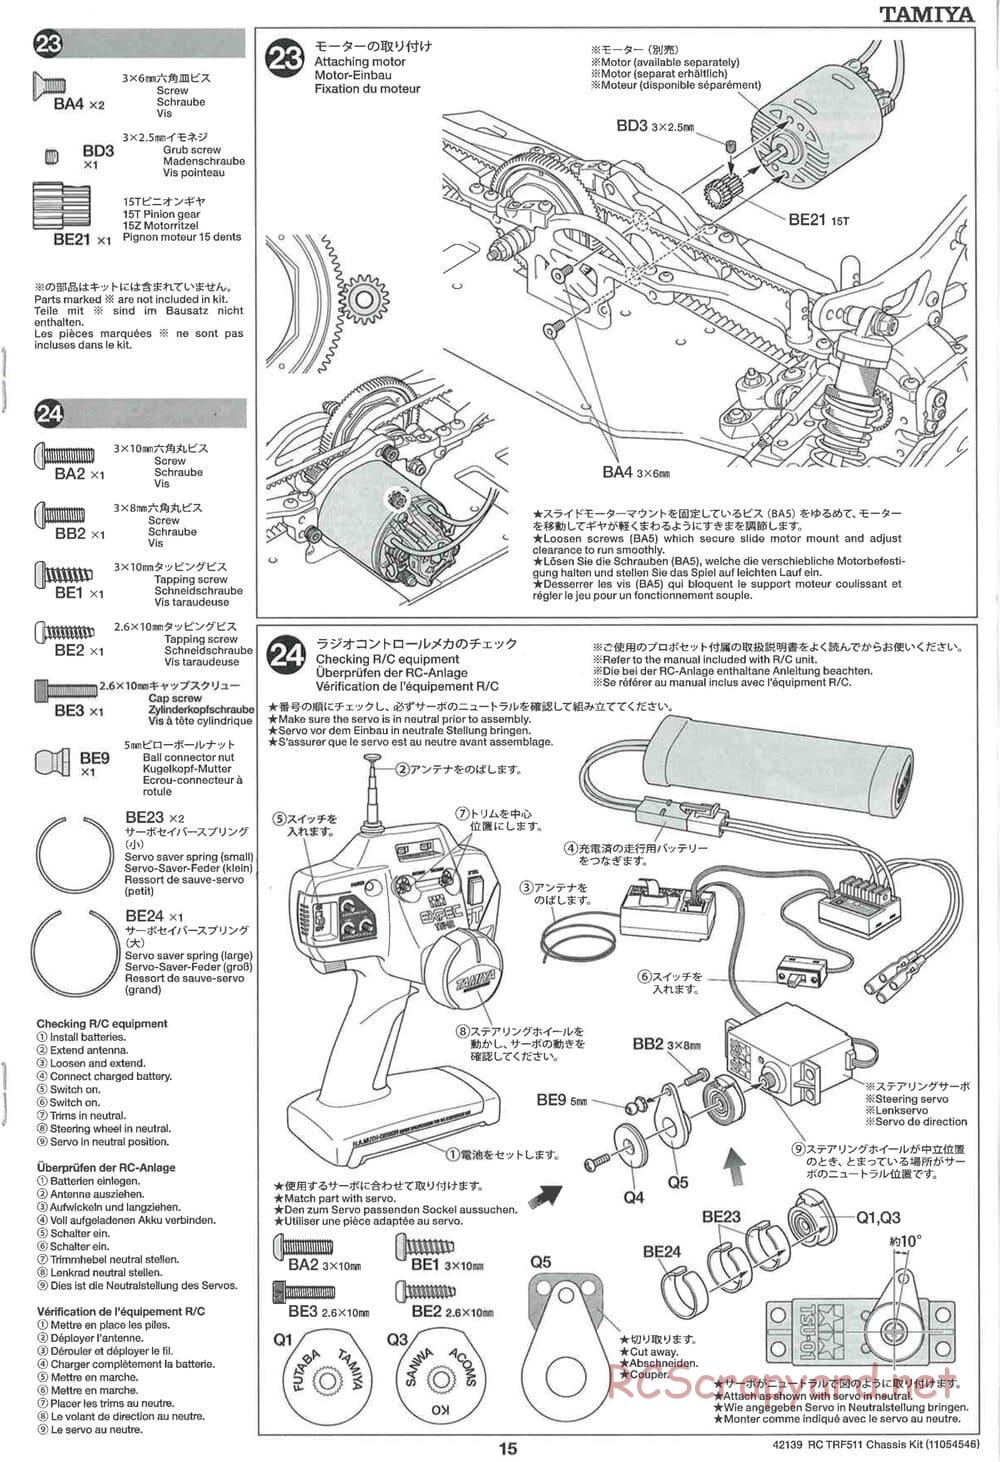 Tamiya - TRF511 Chassis - Manual - Page 15